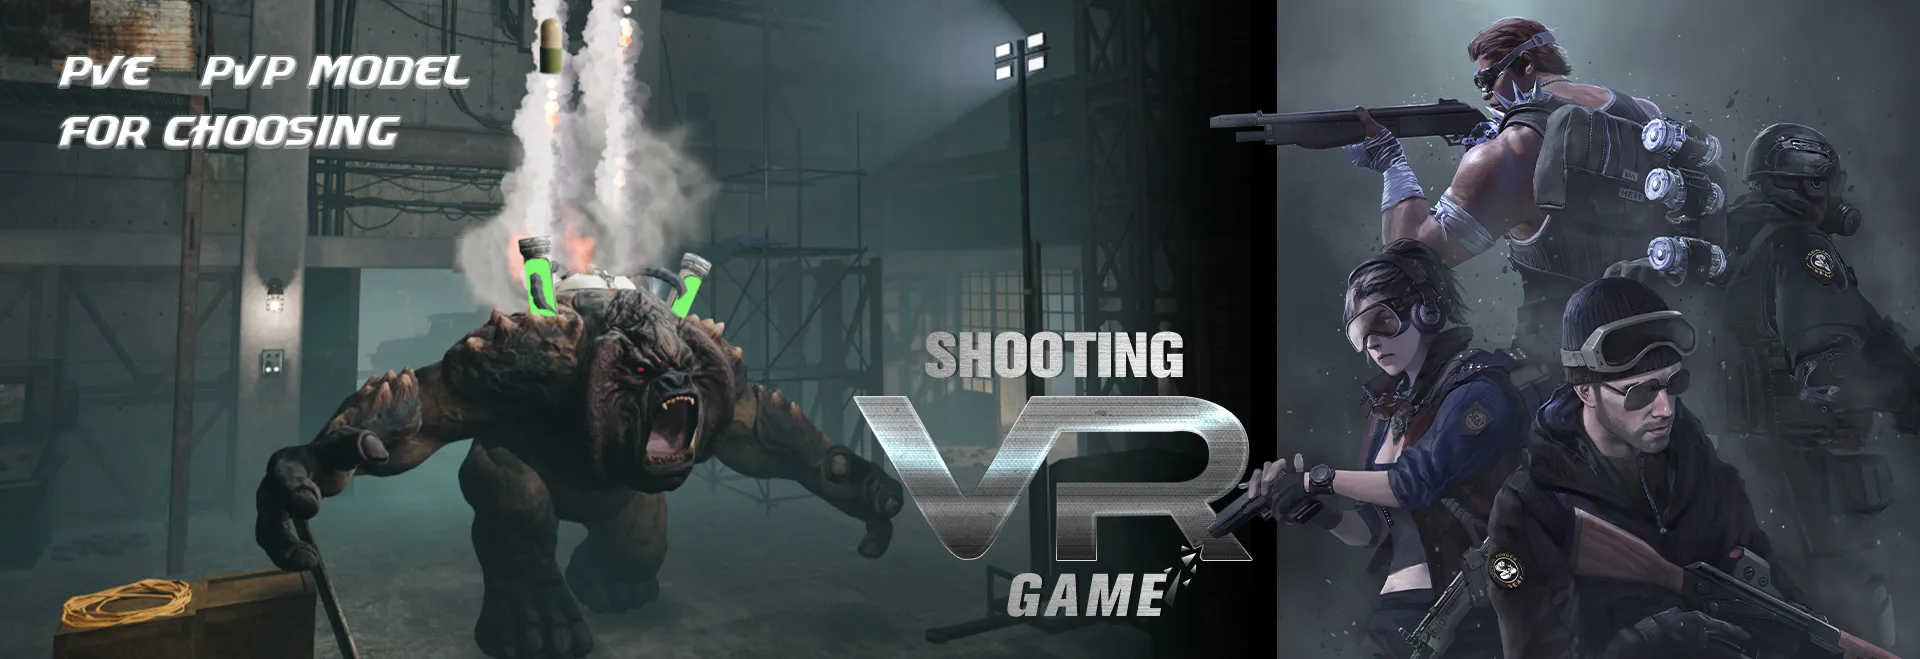 VR Shooting Game